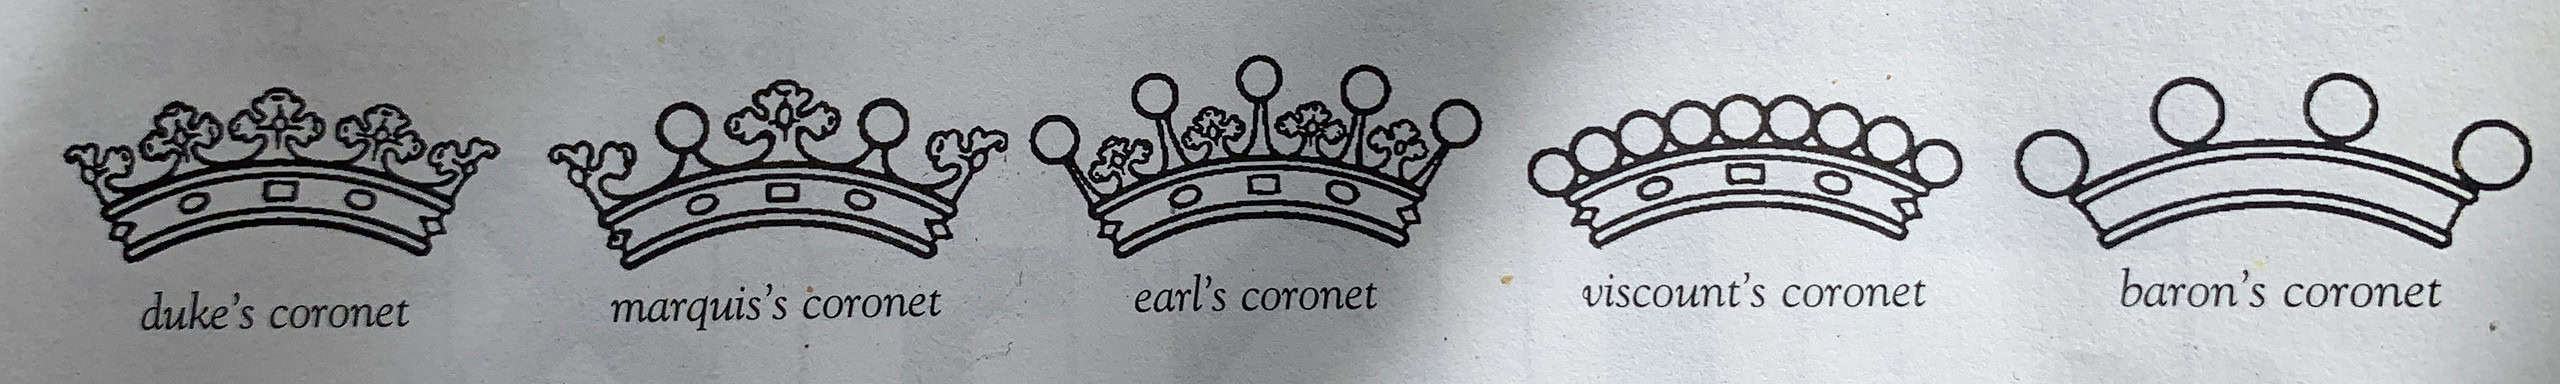 coronets